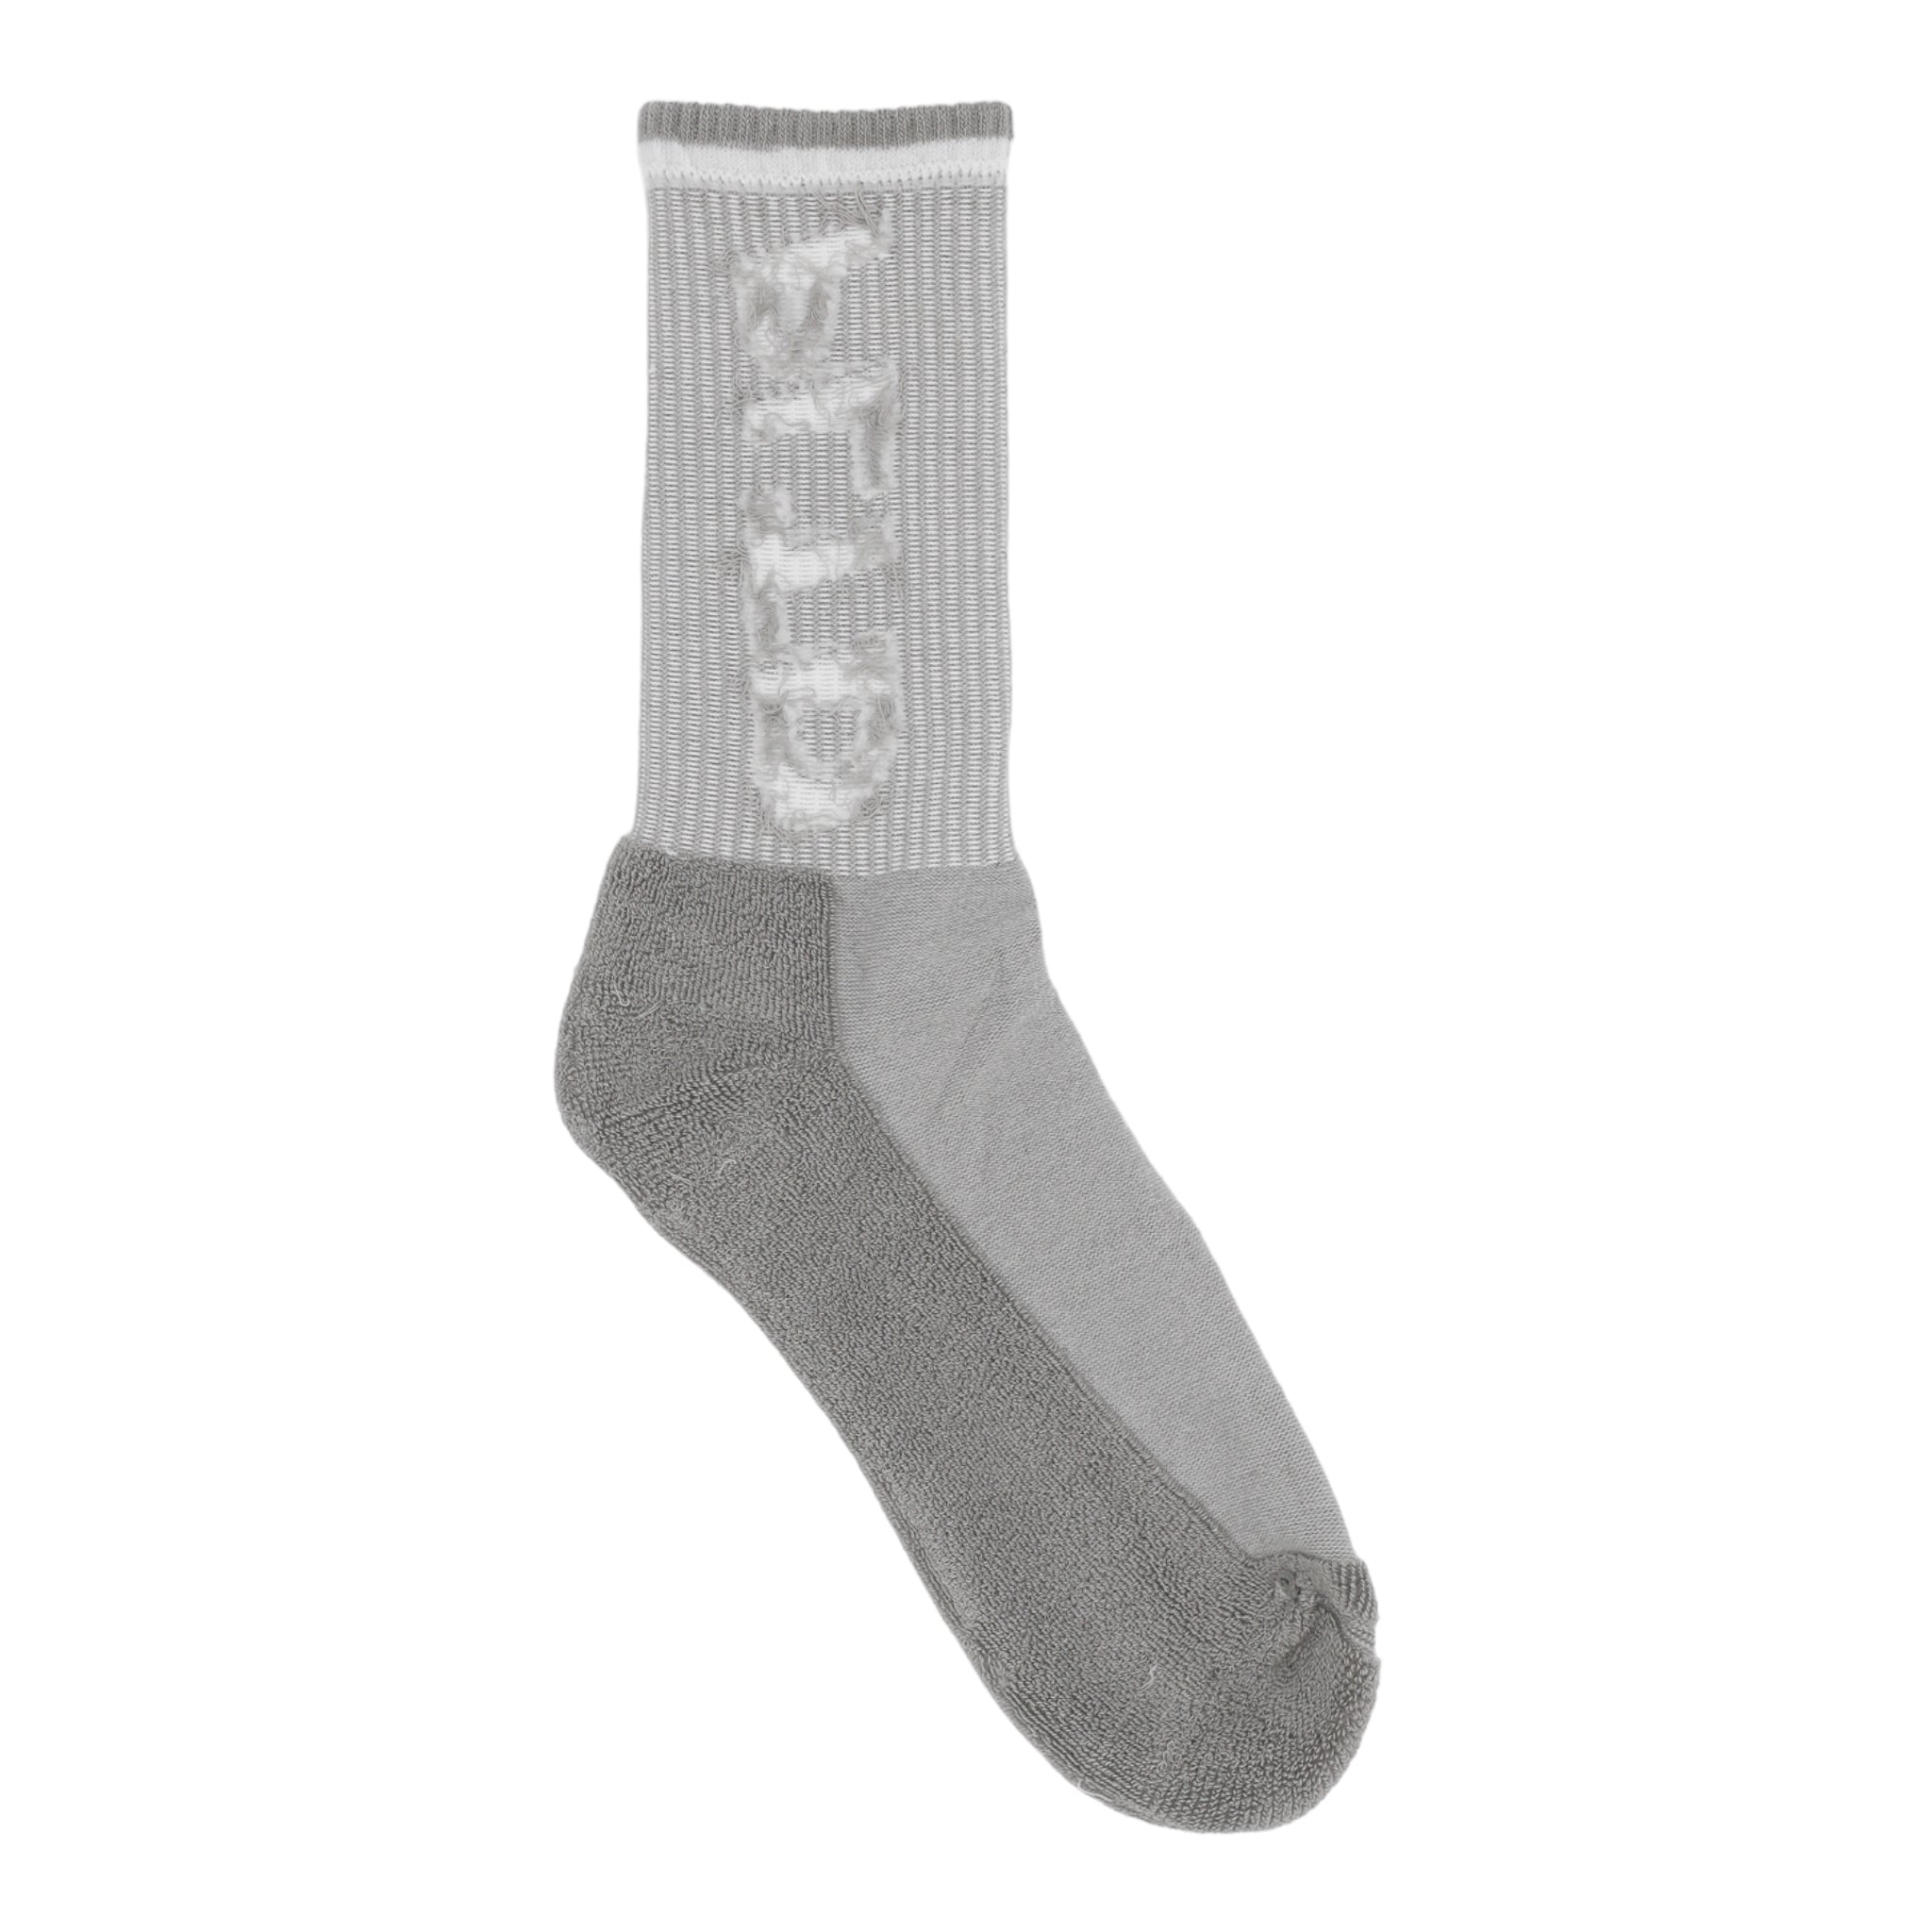 Team PLTD - Grey Terry Cloth Socks